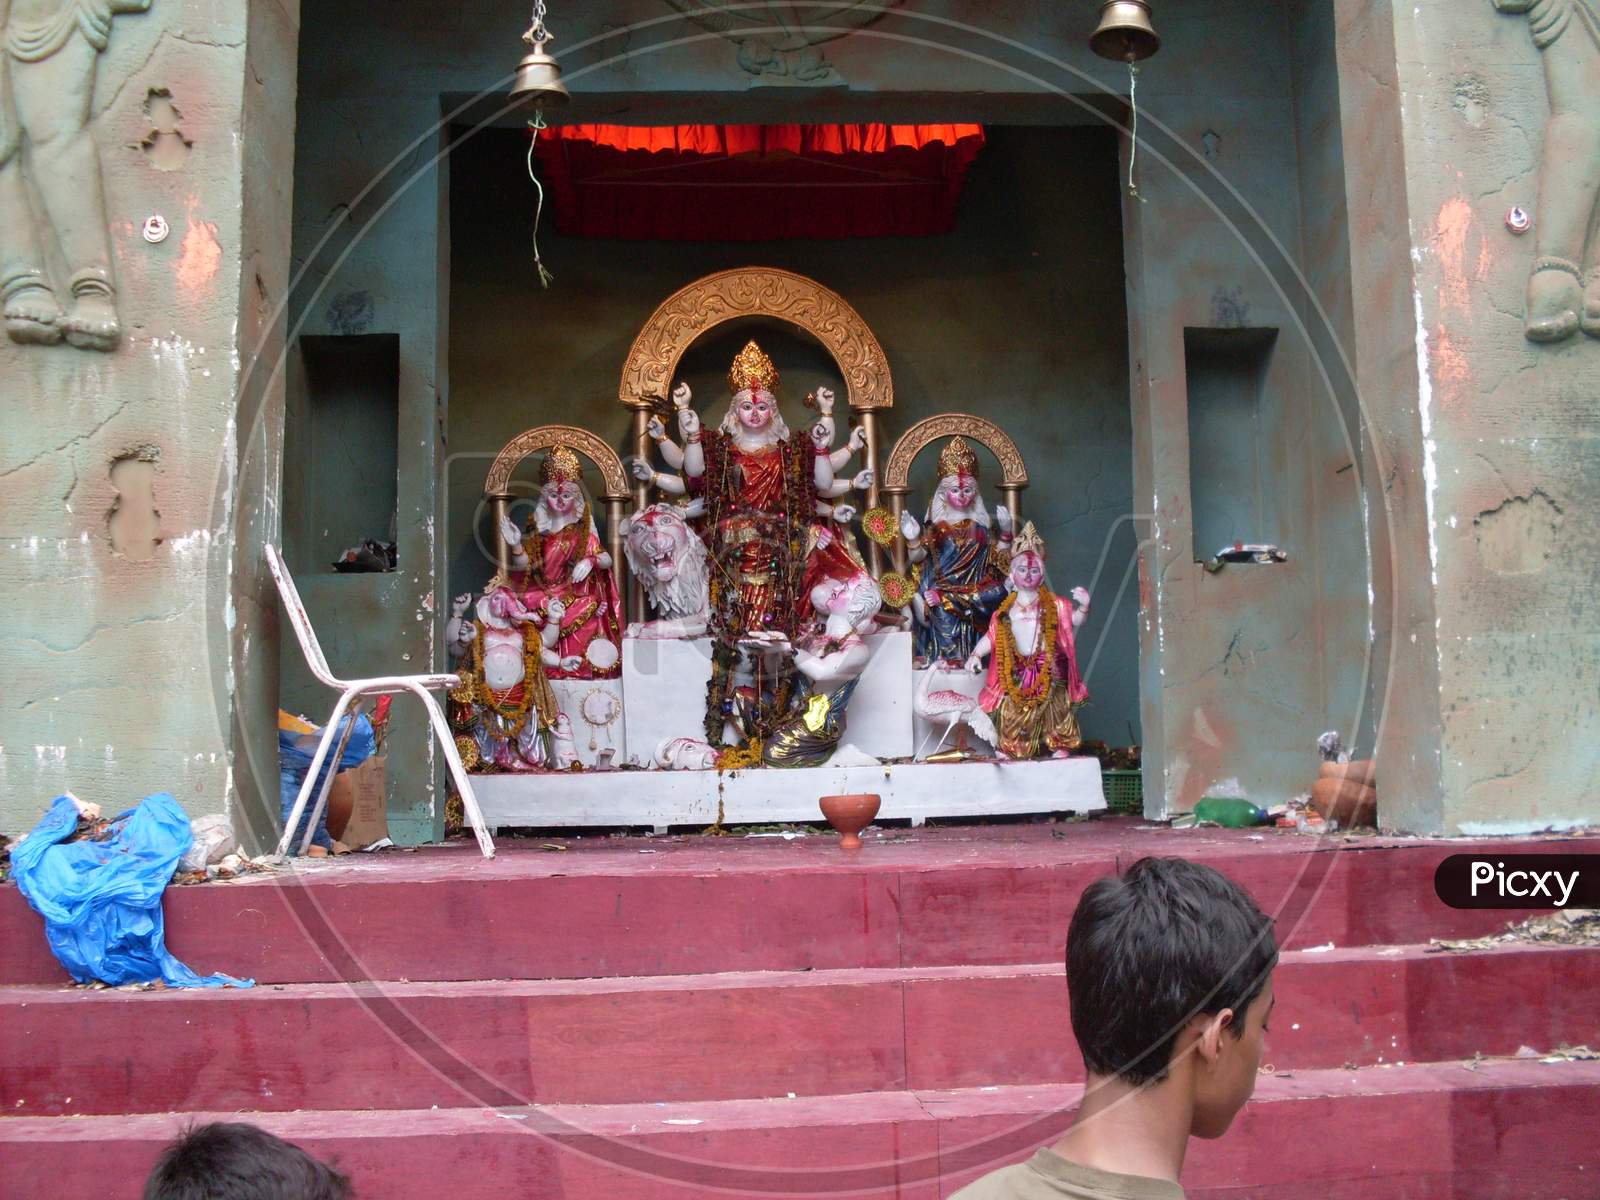 Idol of goddess Durga